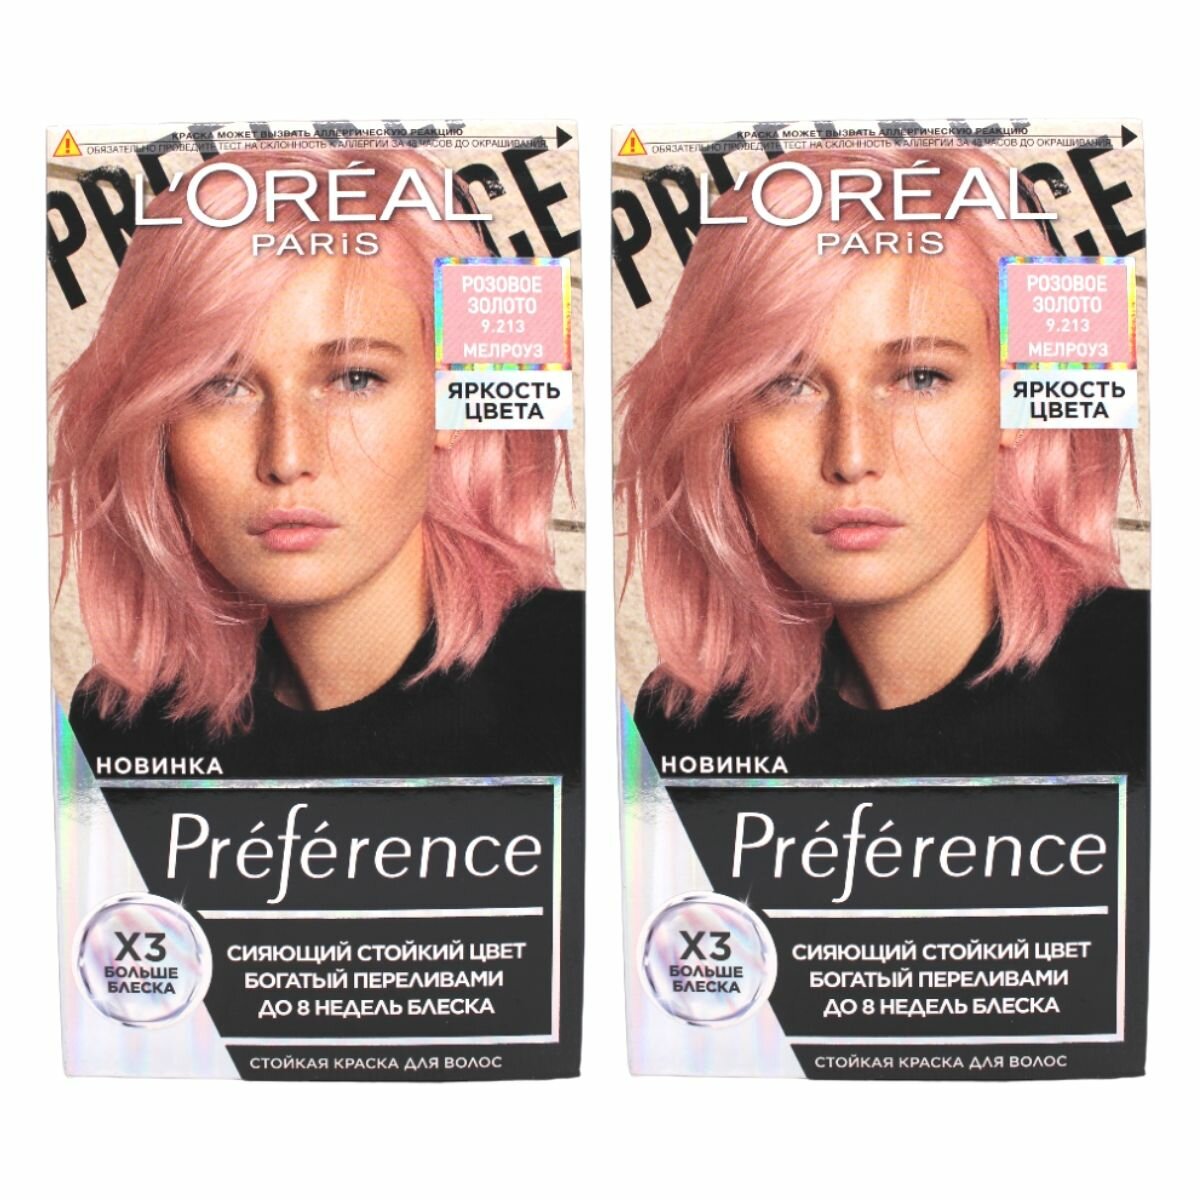 L'OREAL Preference Краска для волос 9.213 Розовое Золото Мелроуз набор 2шт